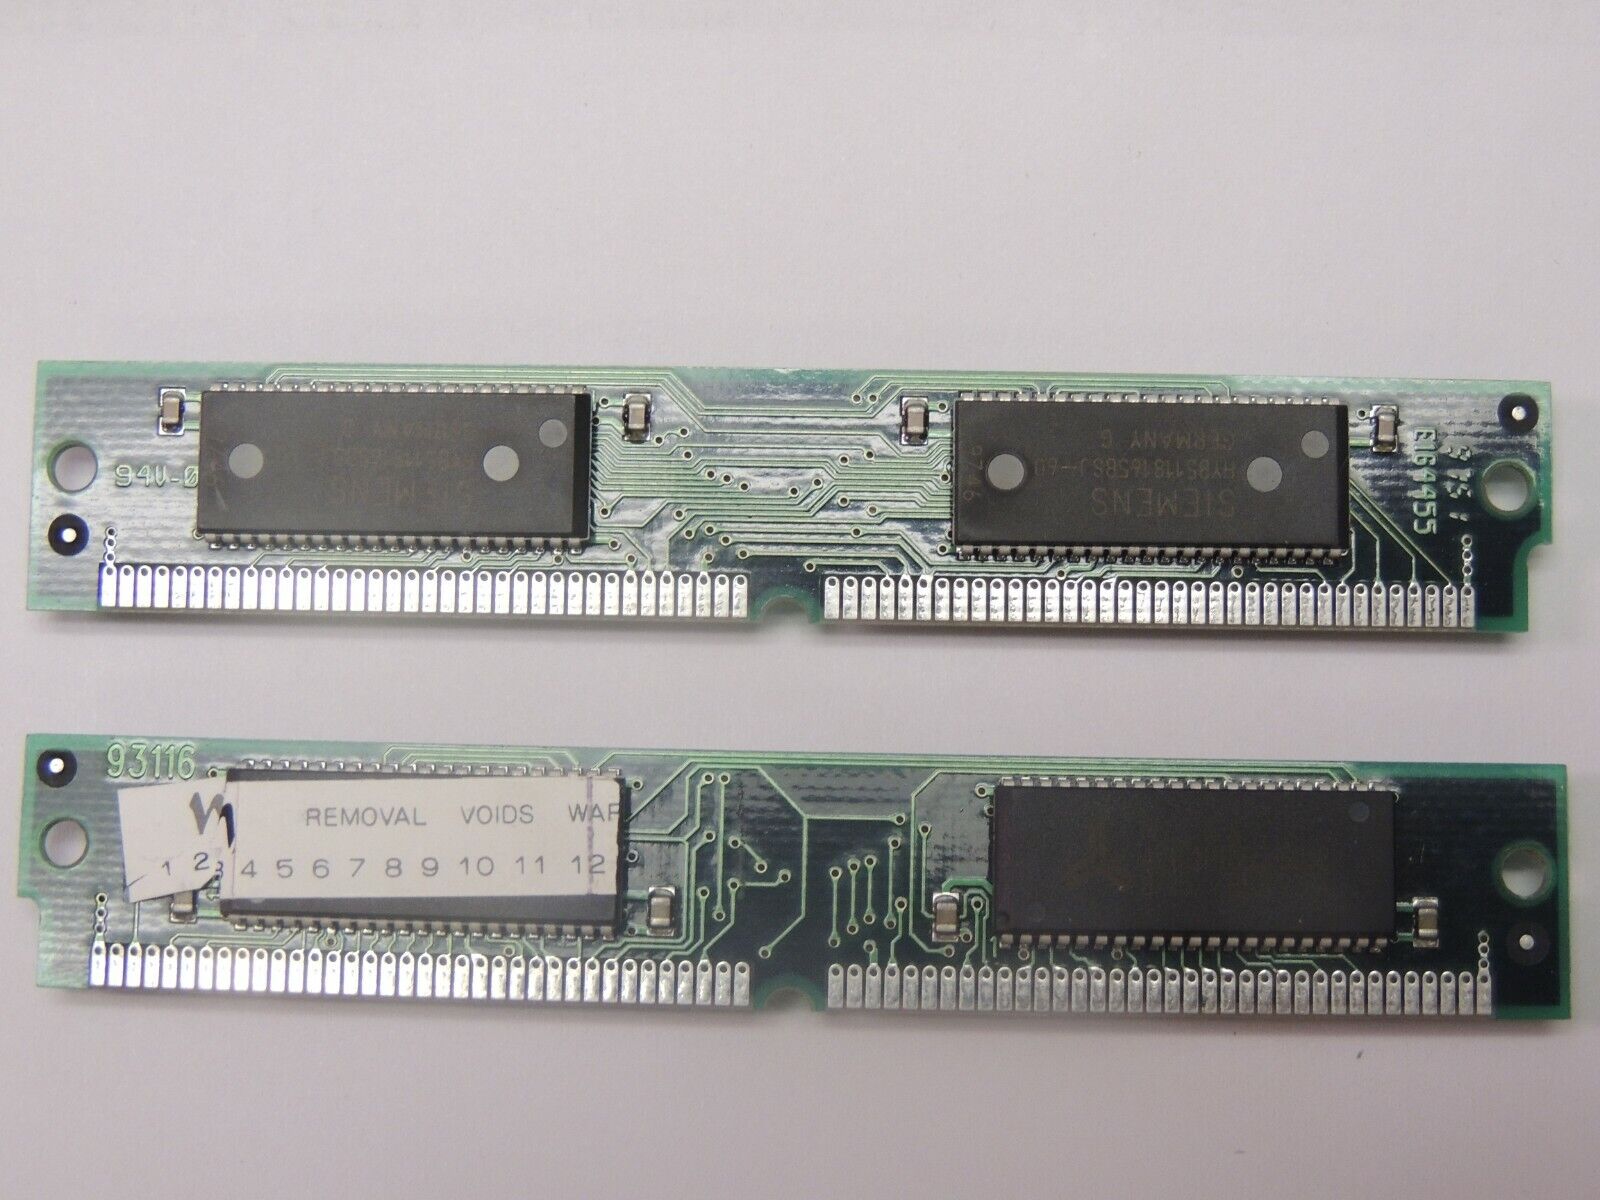 2 x 8MB (16MB) SIMM RAM MODULES, 60NS, EDO, NON-PARITY, 72 PIN